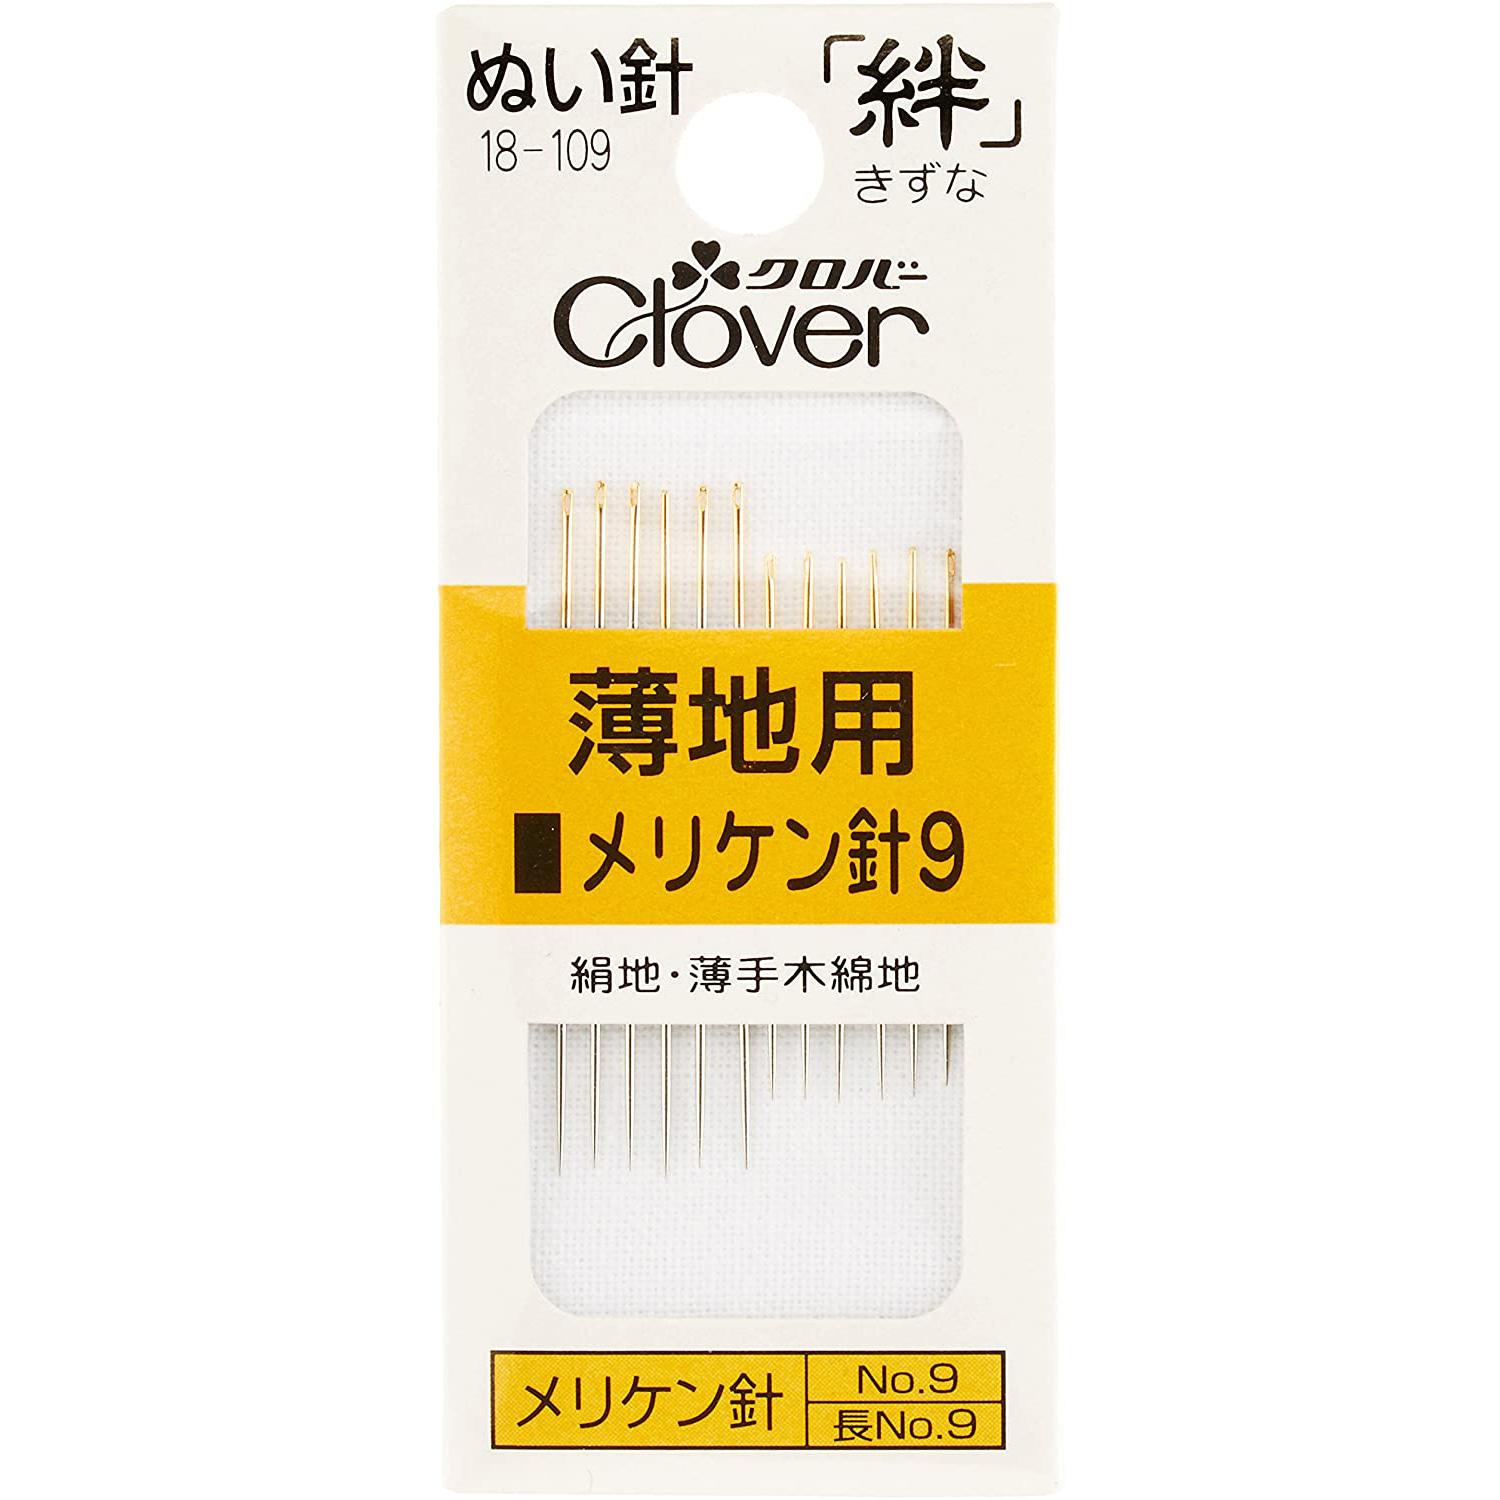 CL18-109 Sewing needle Kizuna Meriken needle (pcs)